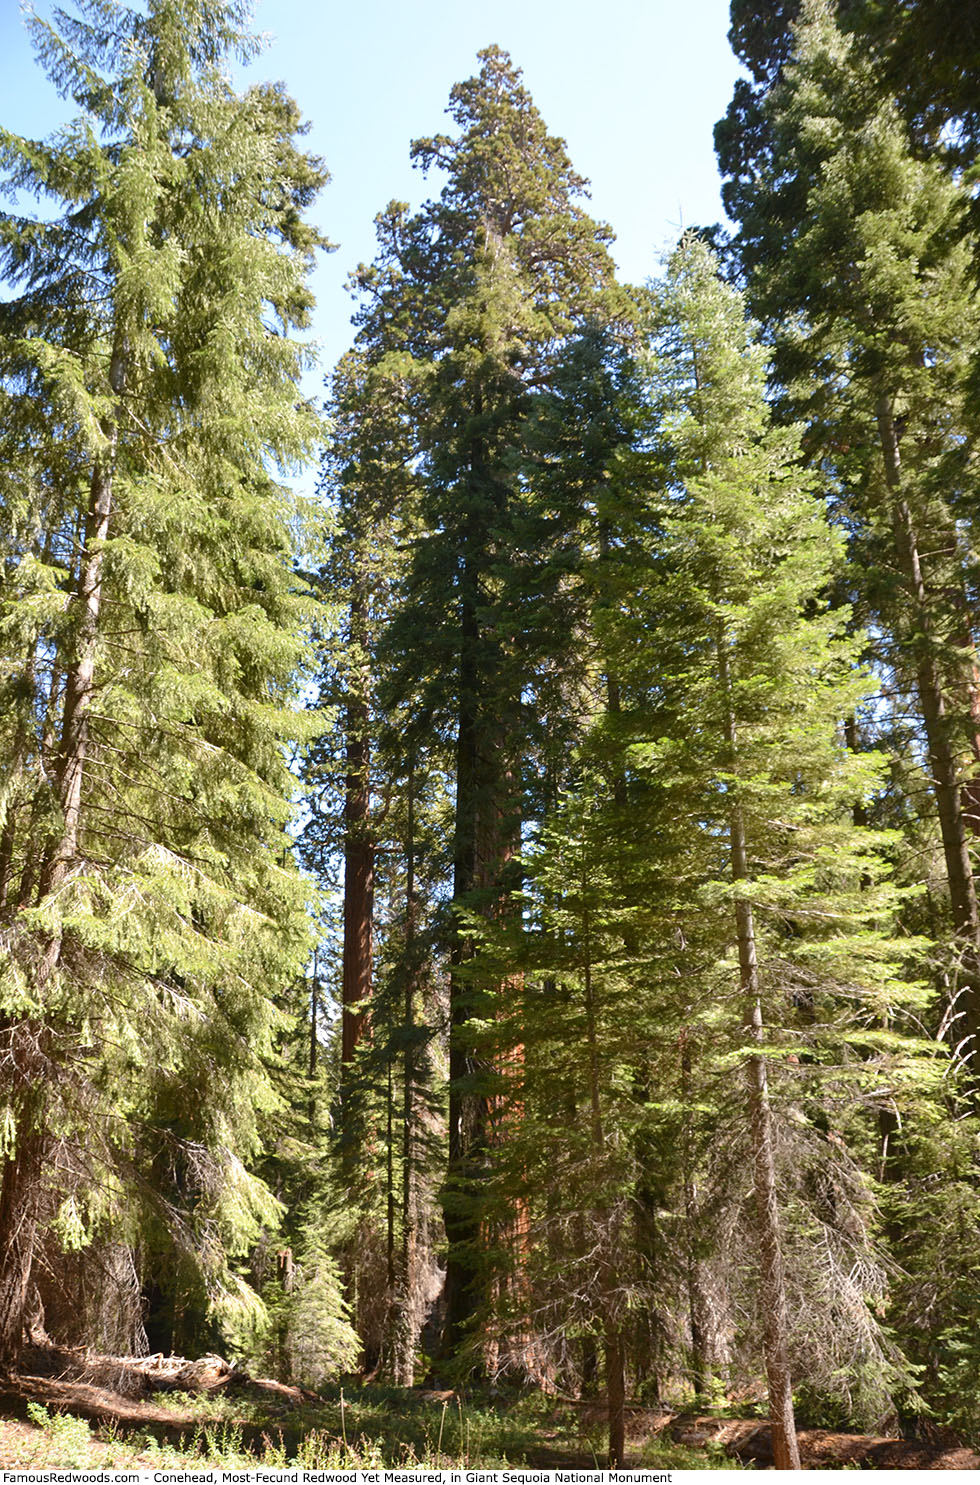 Giant Sequoia National Monument - Conehead Tree